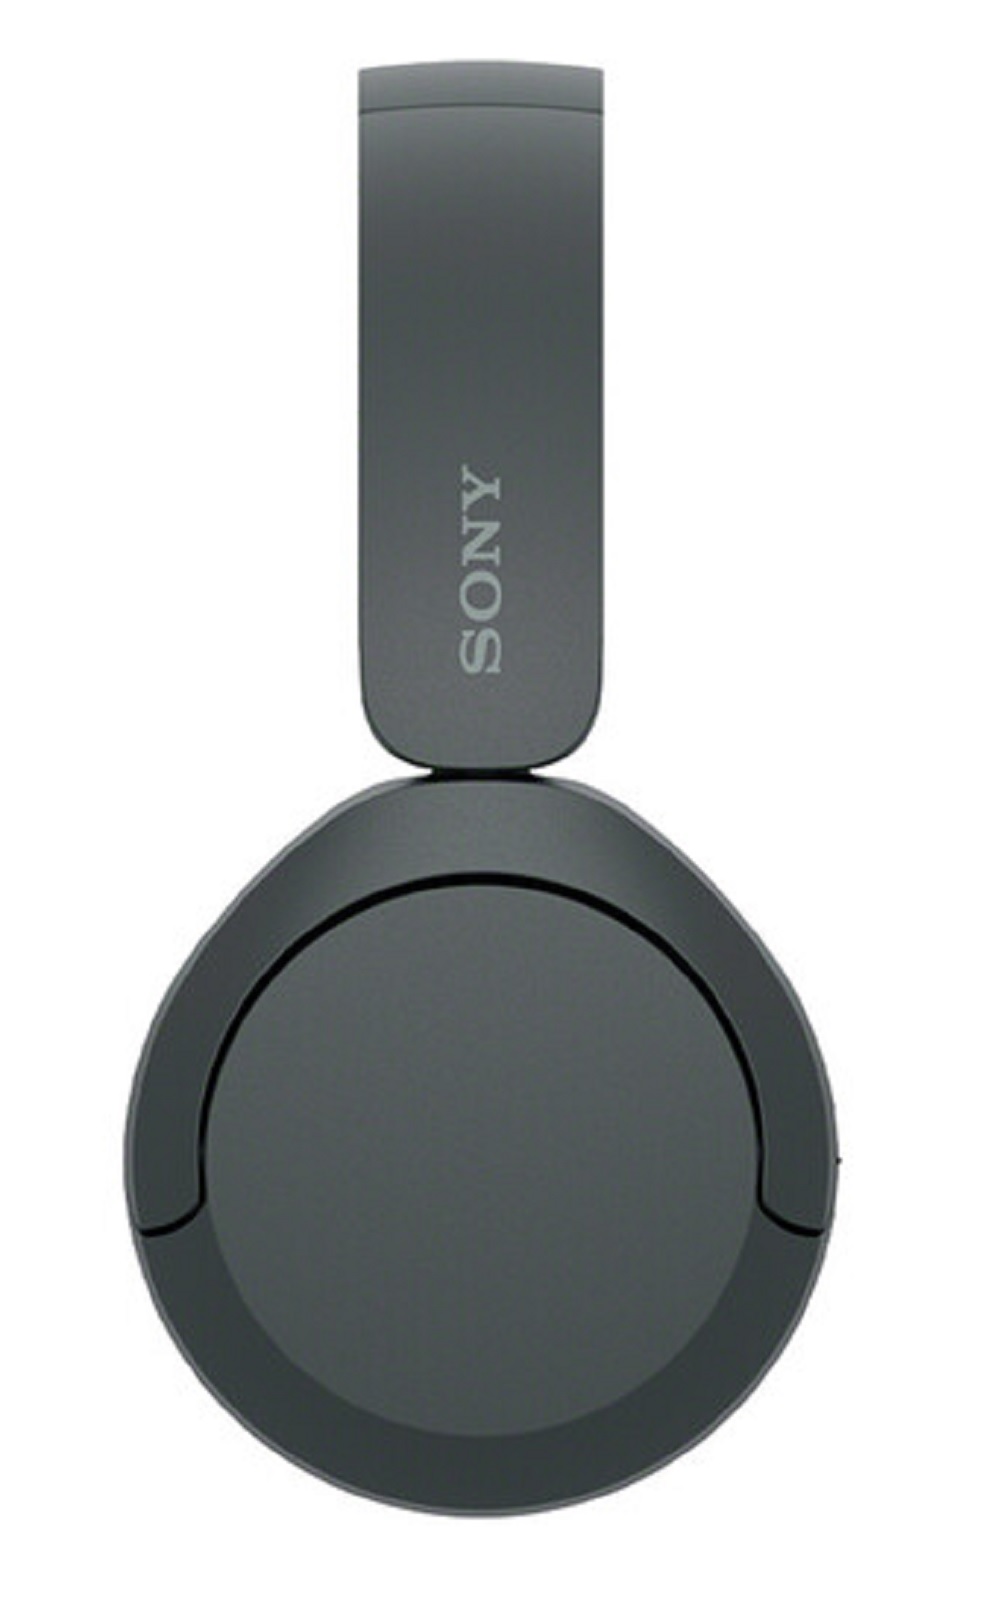 Sony Wireless Headphones with Microphone